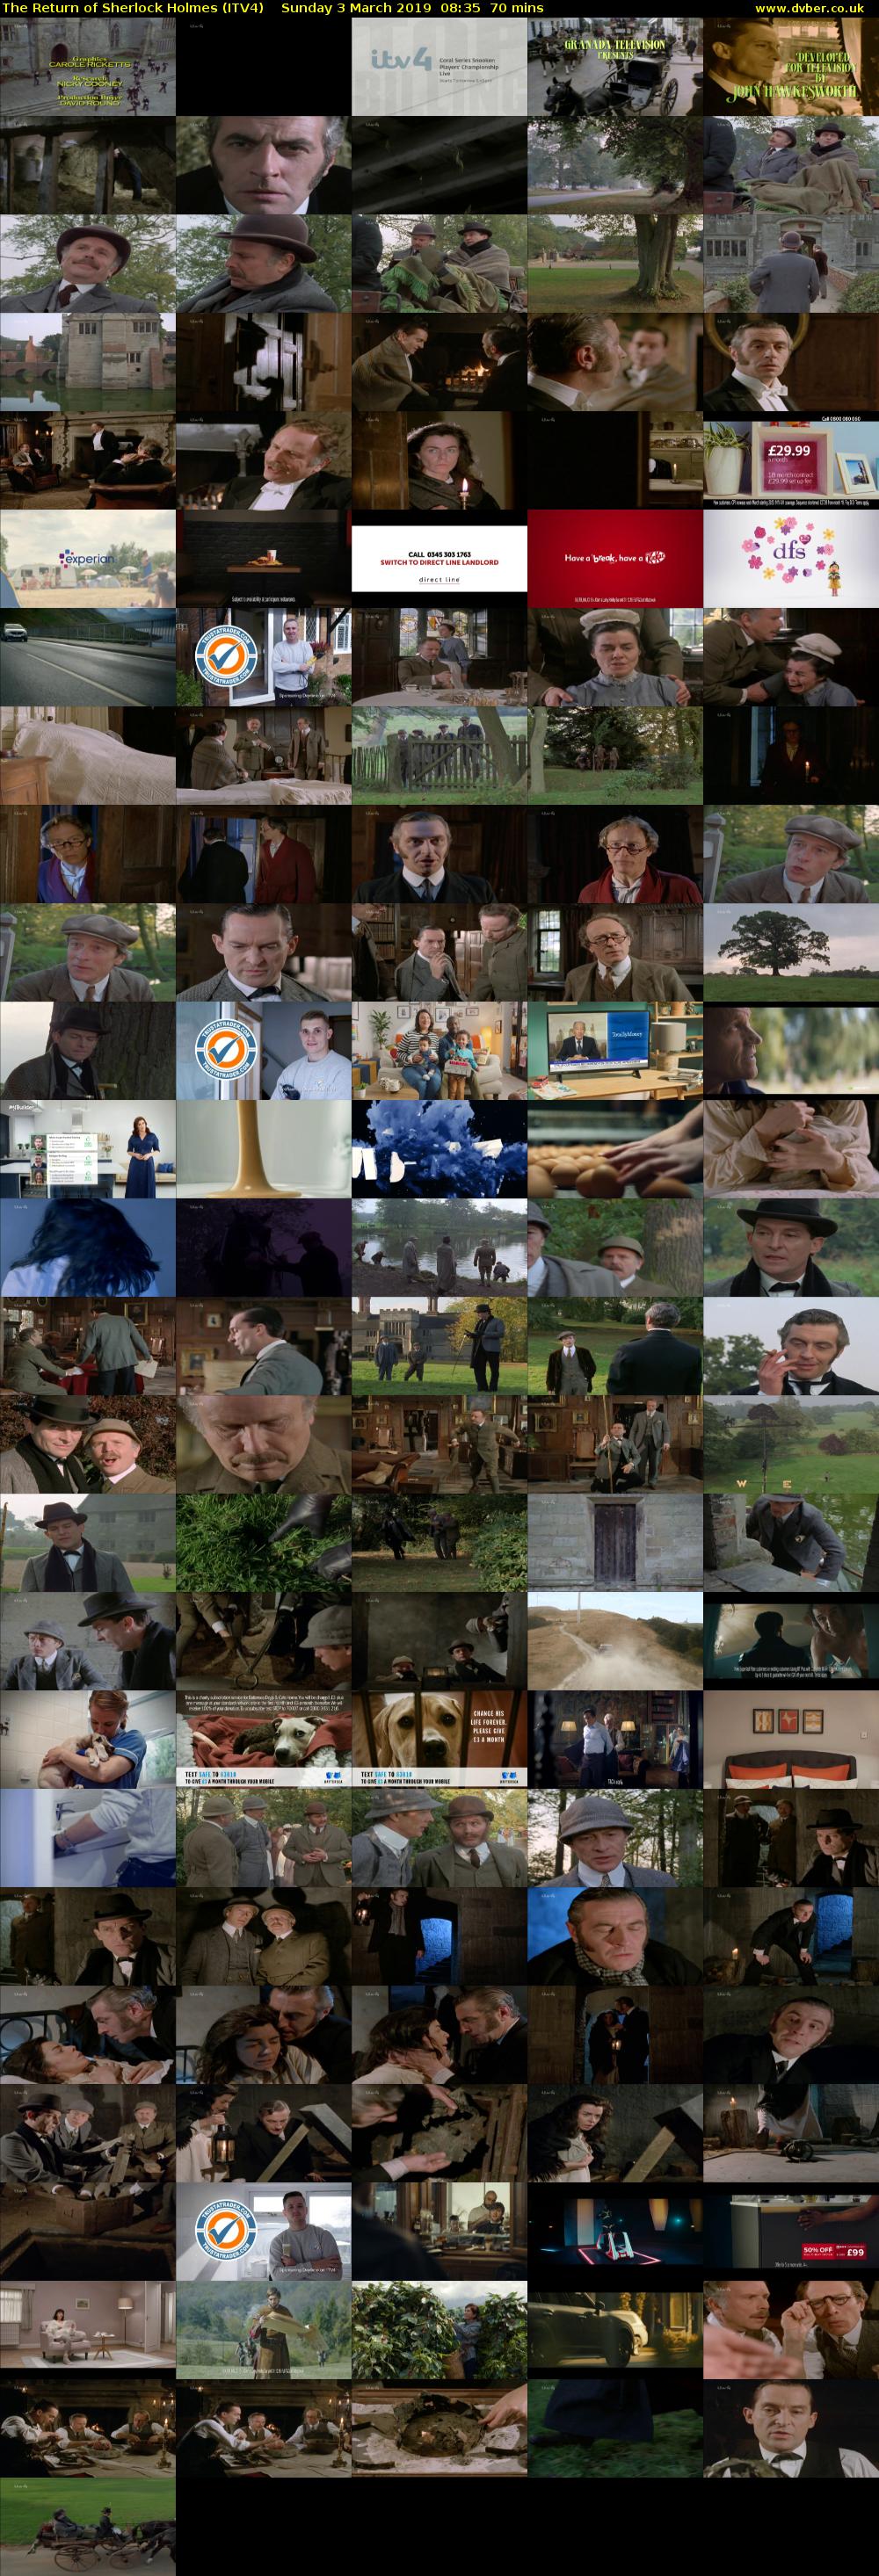 The Return of Sherlock Holmes (ITV4) Sunday 3 March 2019 08:35 - 09:45